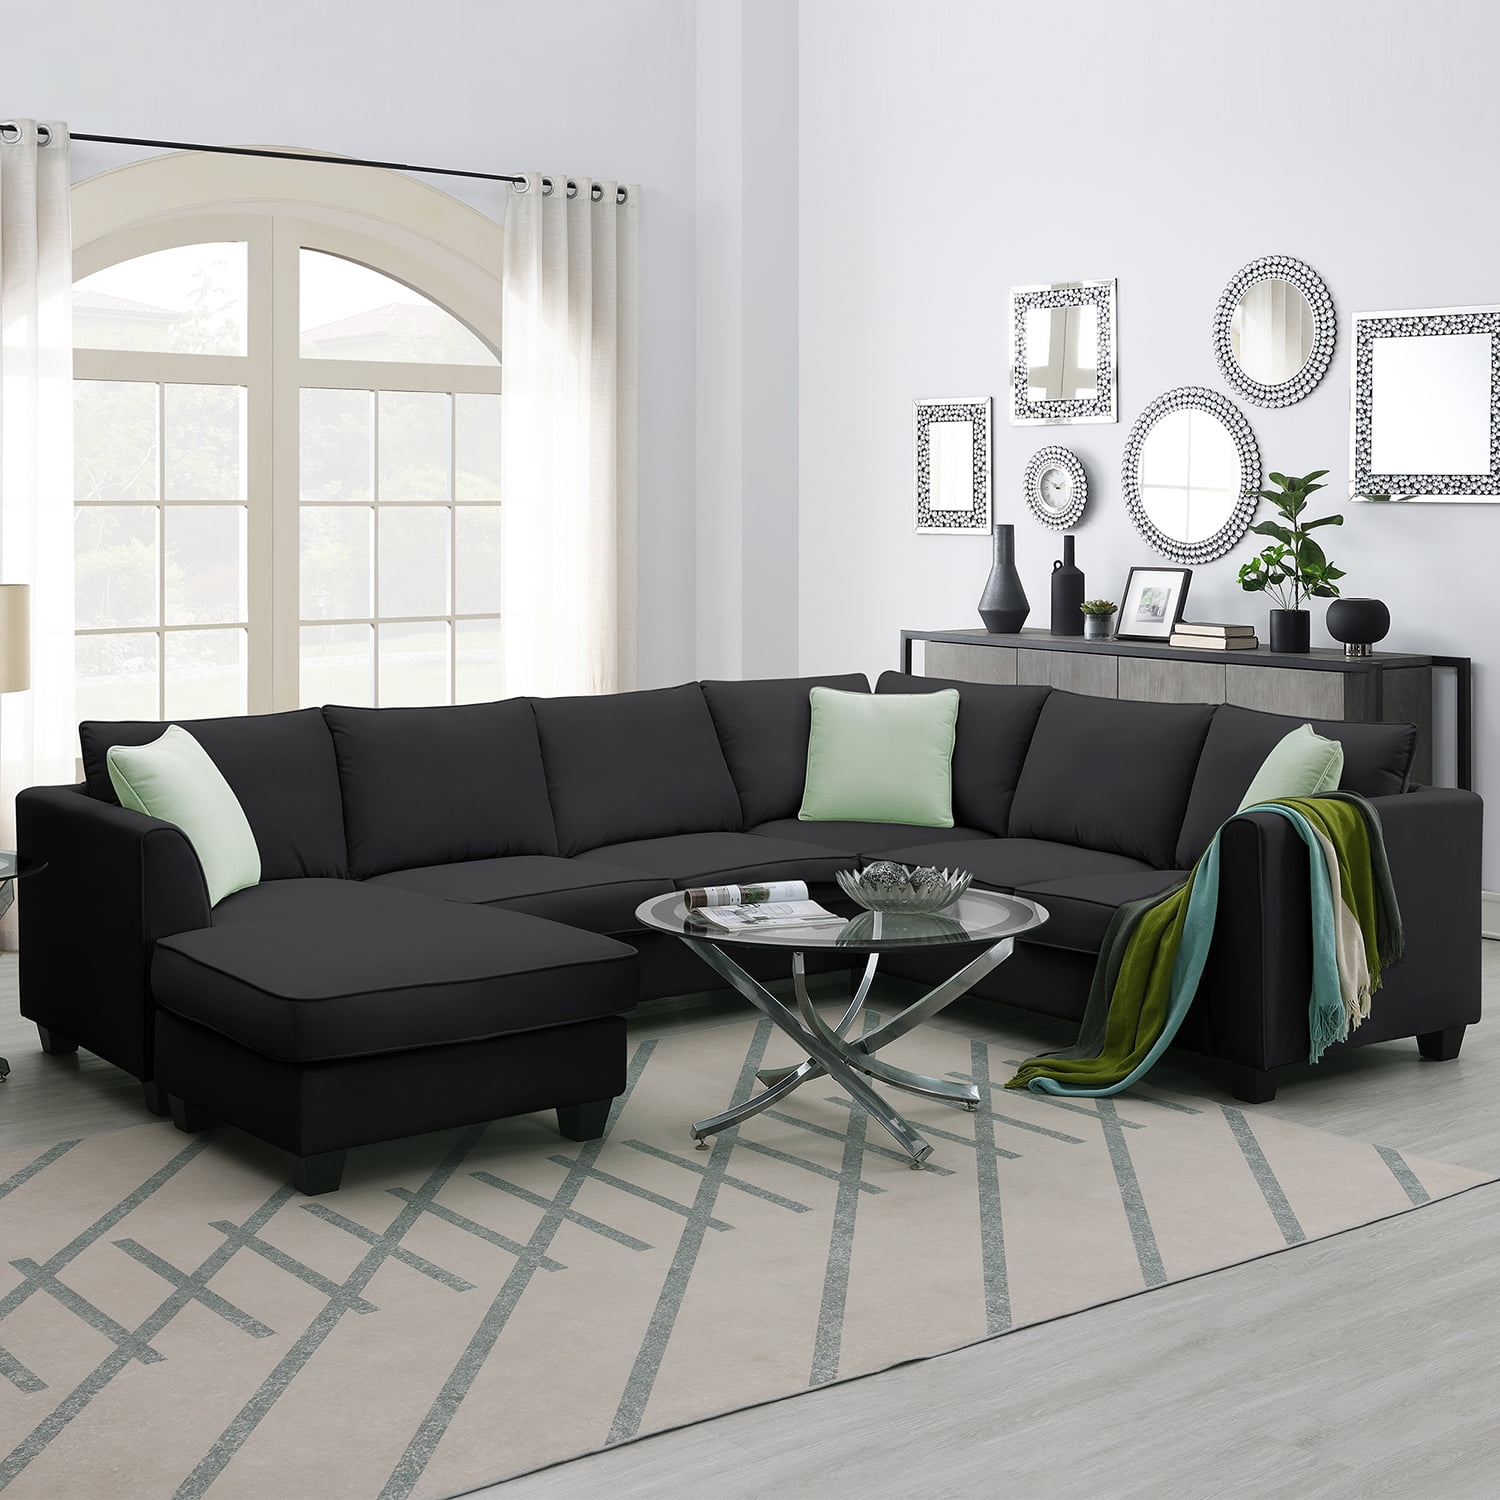 Churanty Modular Sectional Sofa With